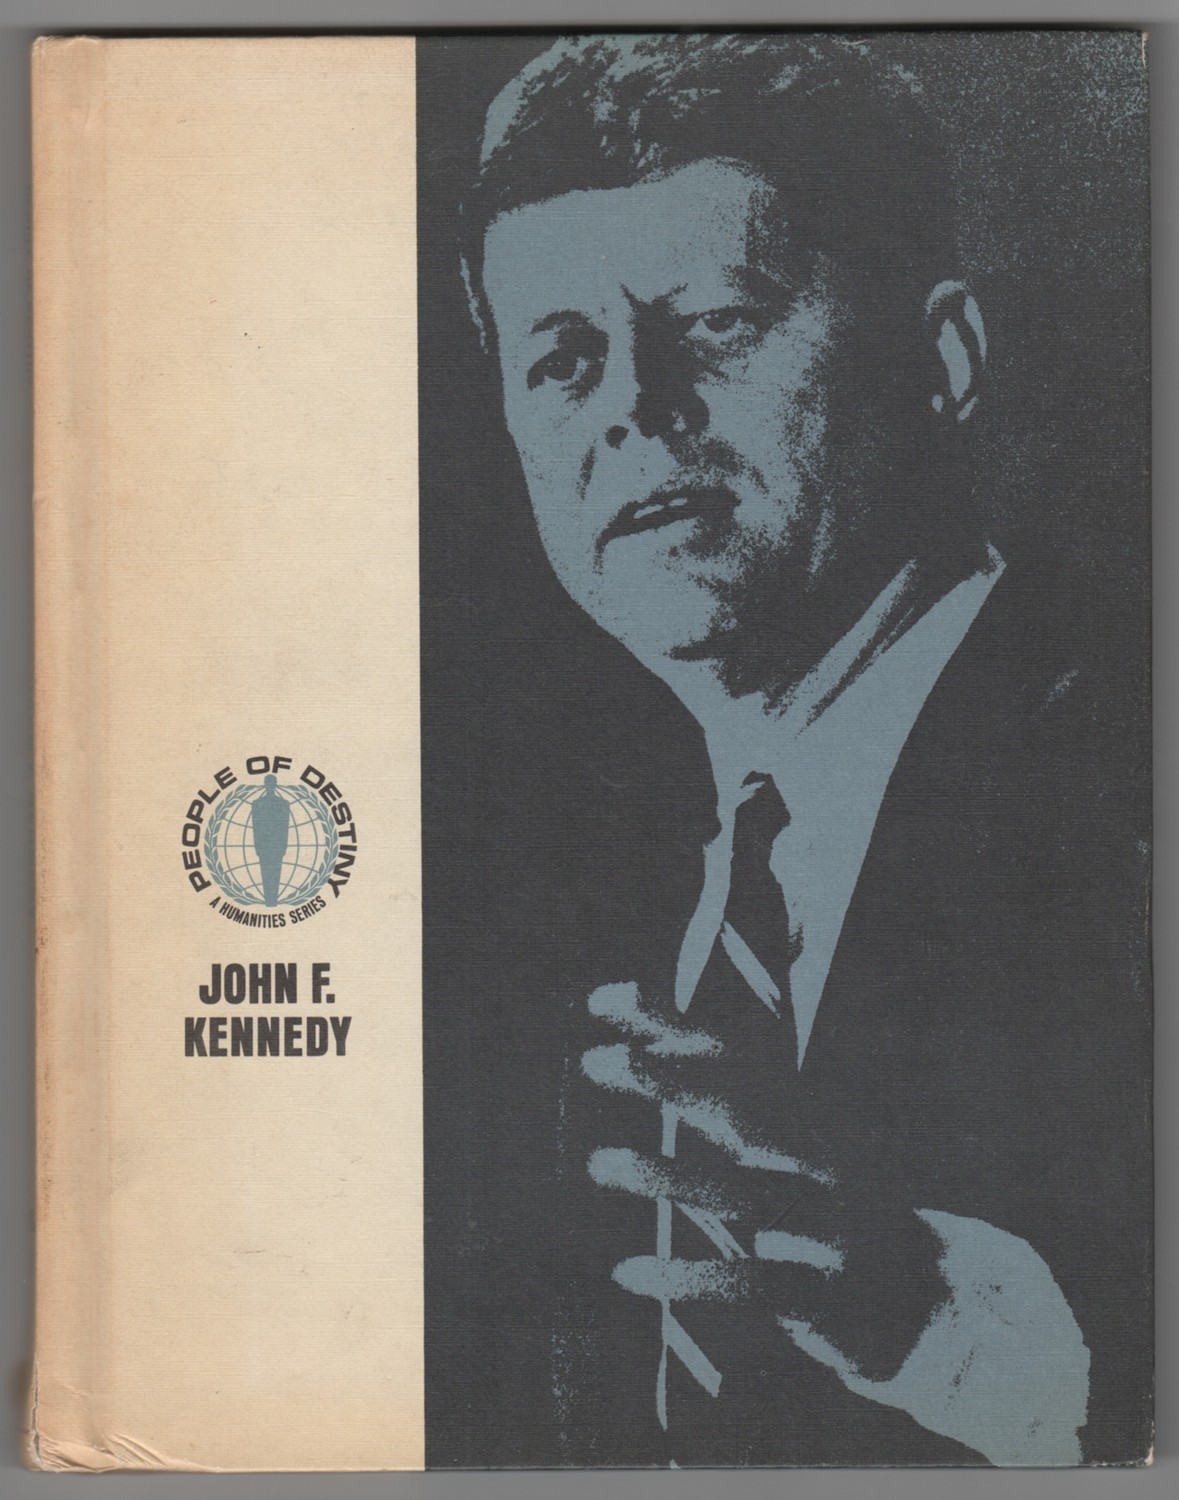 REIDY, JOHN P. & NORMAN RICHARDS - John F. Kennedy